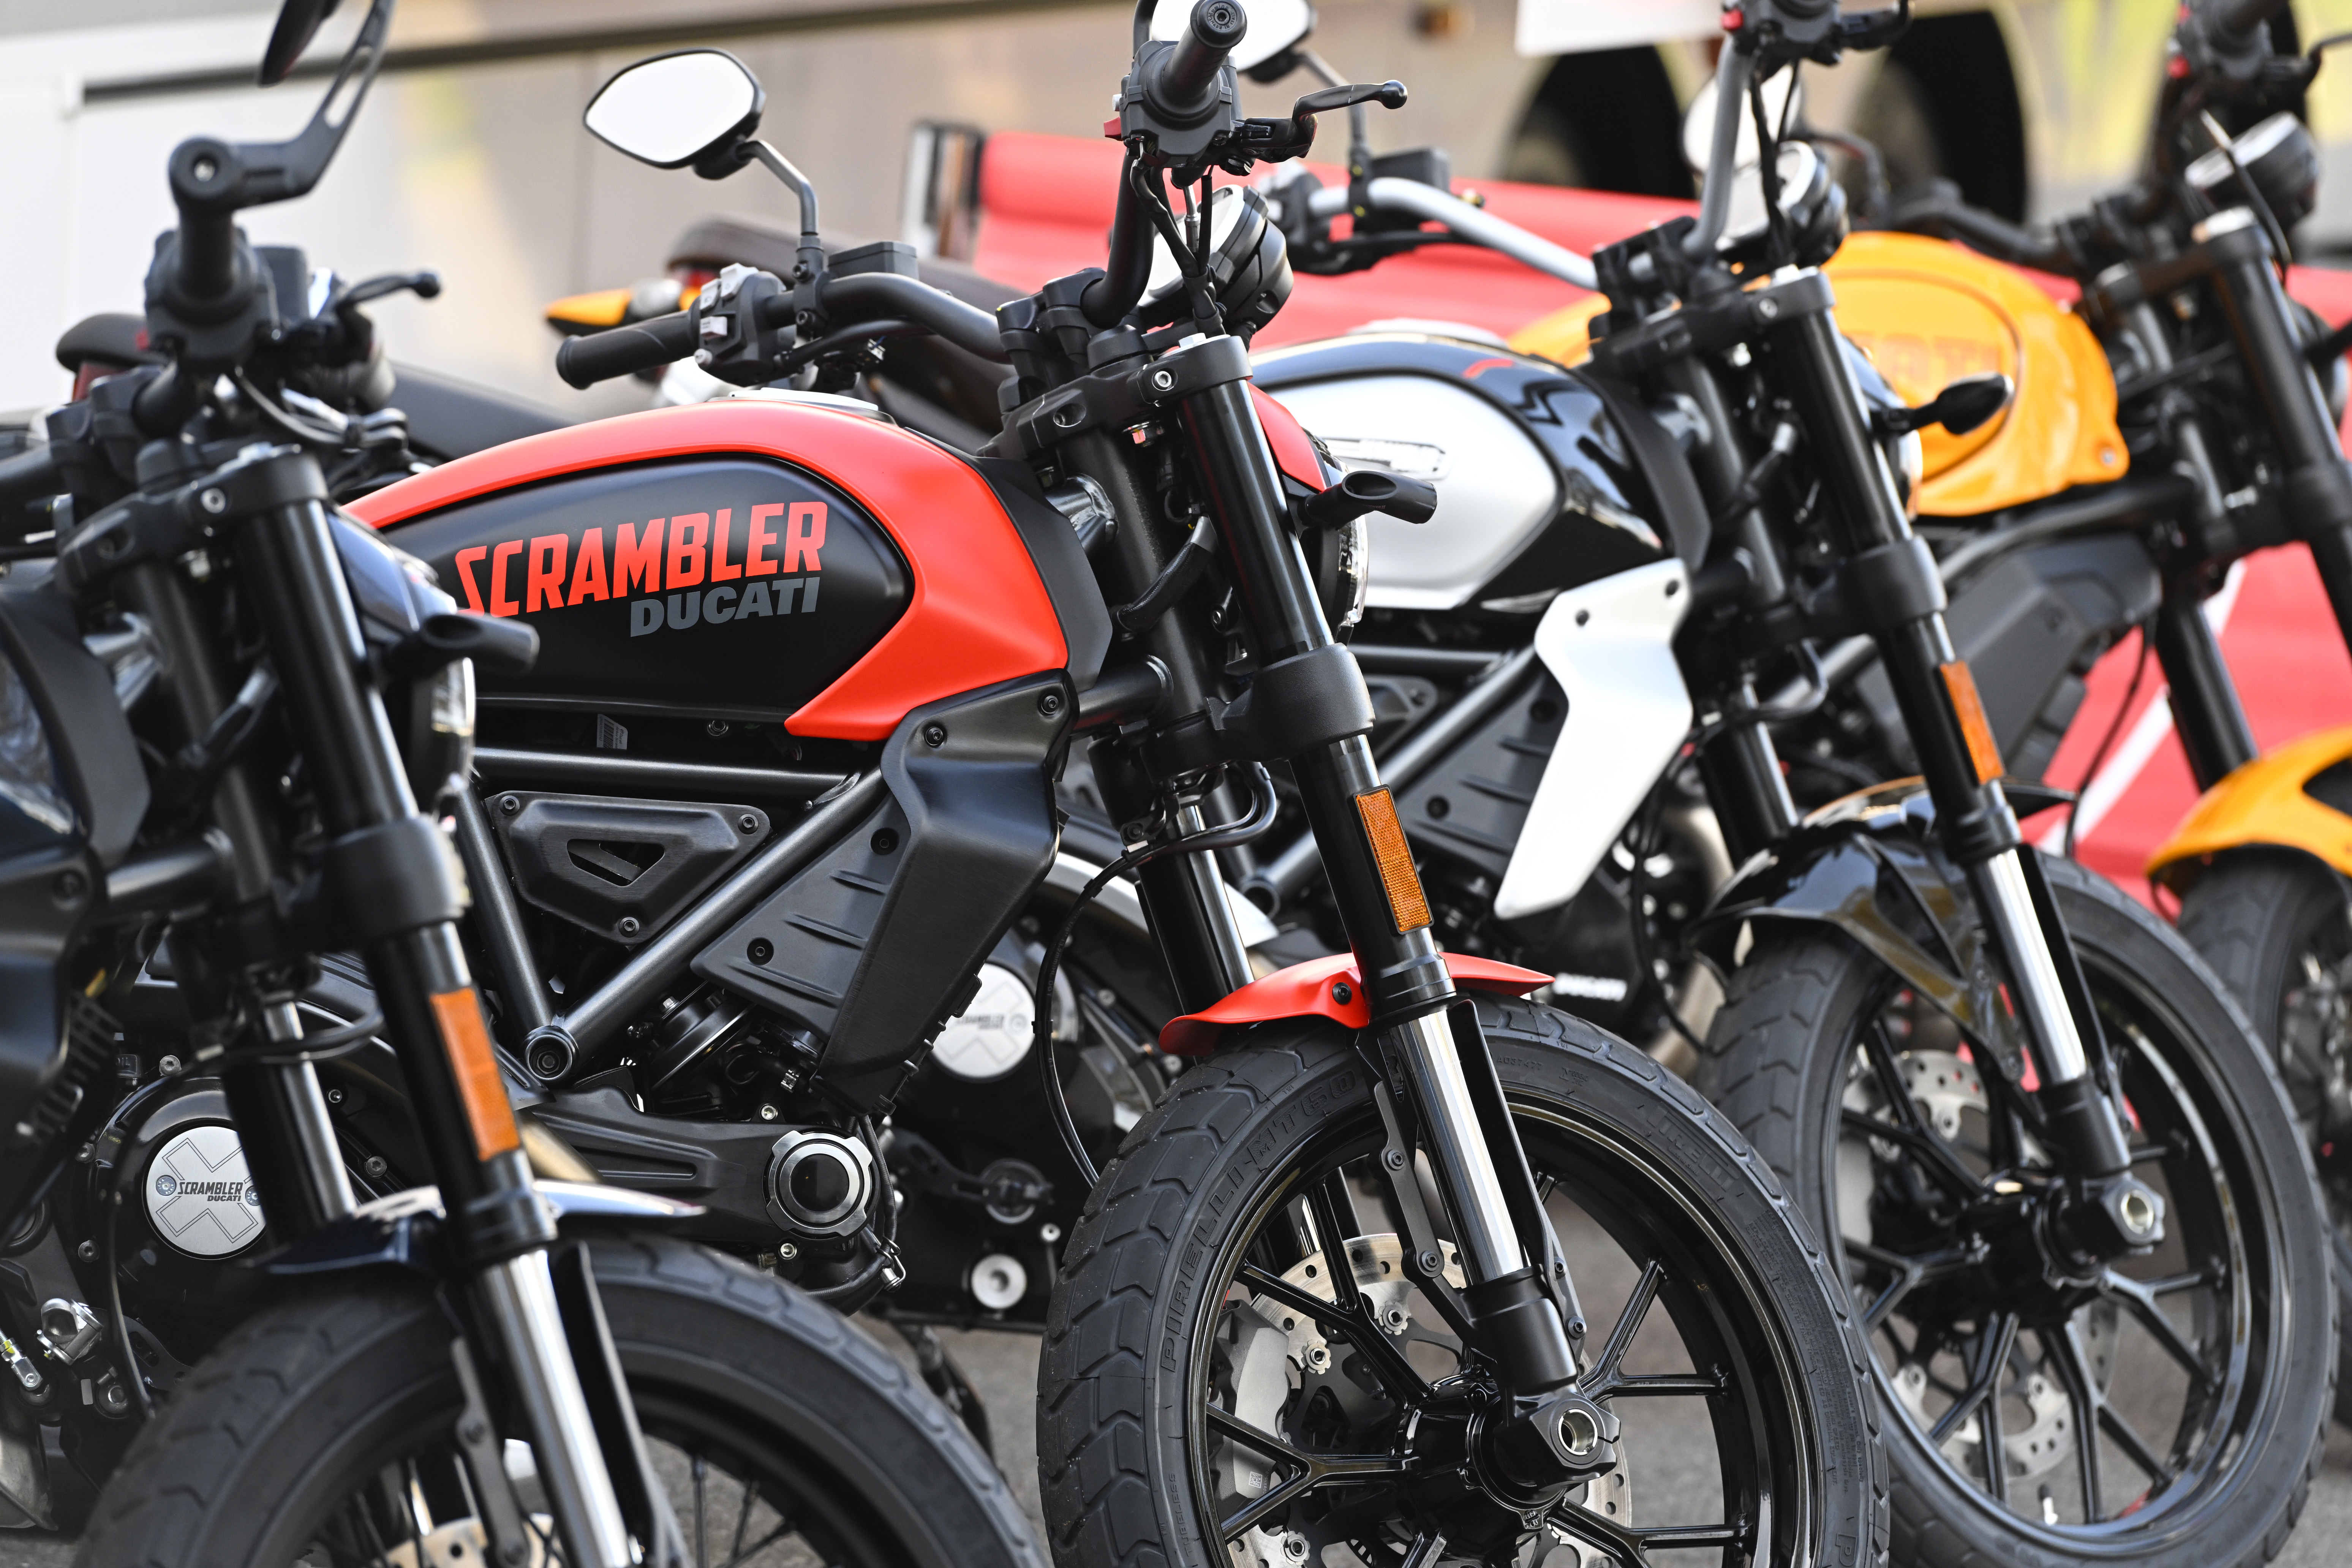 Line-up of the Ducati Scrambler range